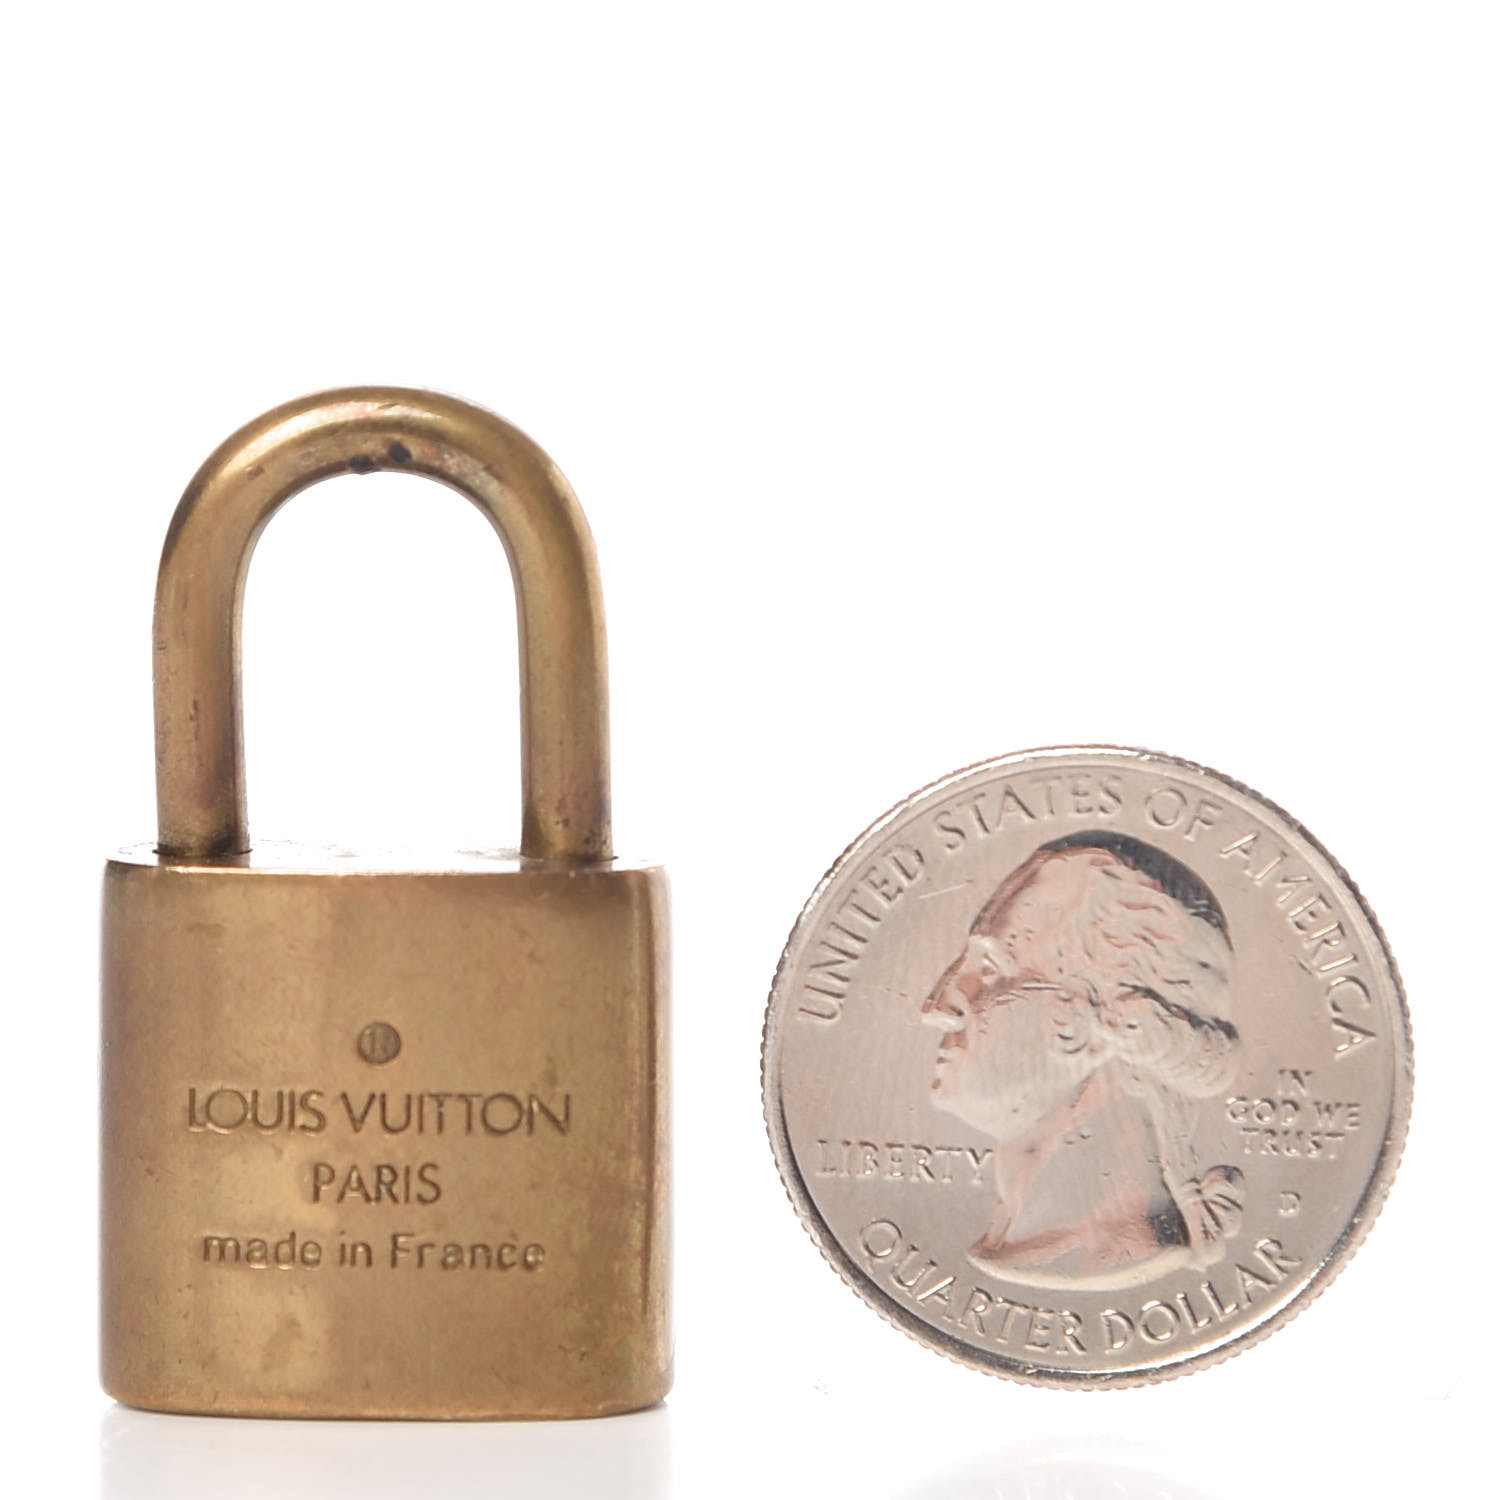 LOUIS VUITTON Brass Lock and Key Set #321 386312